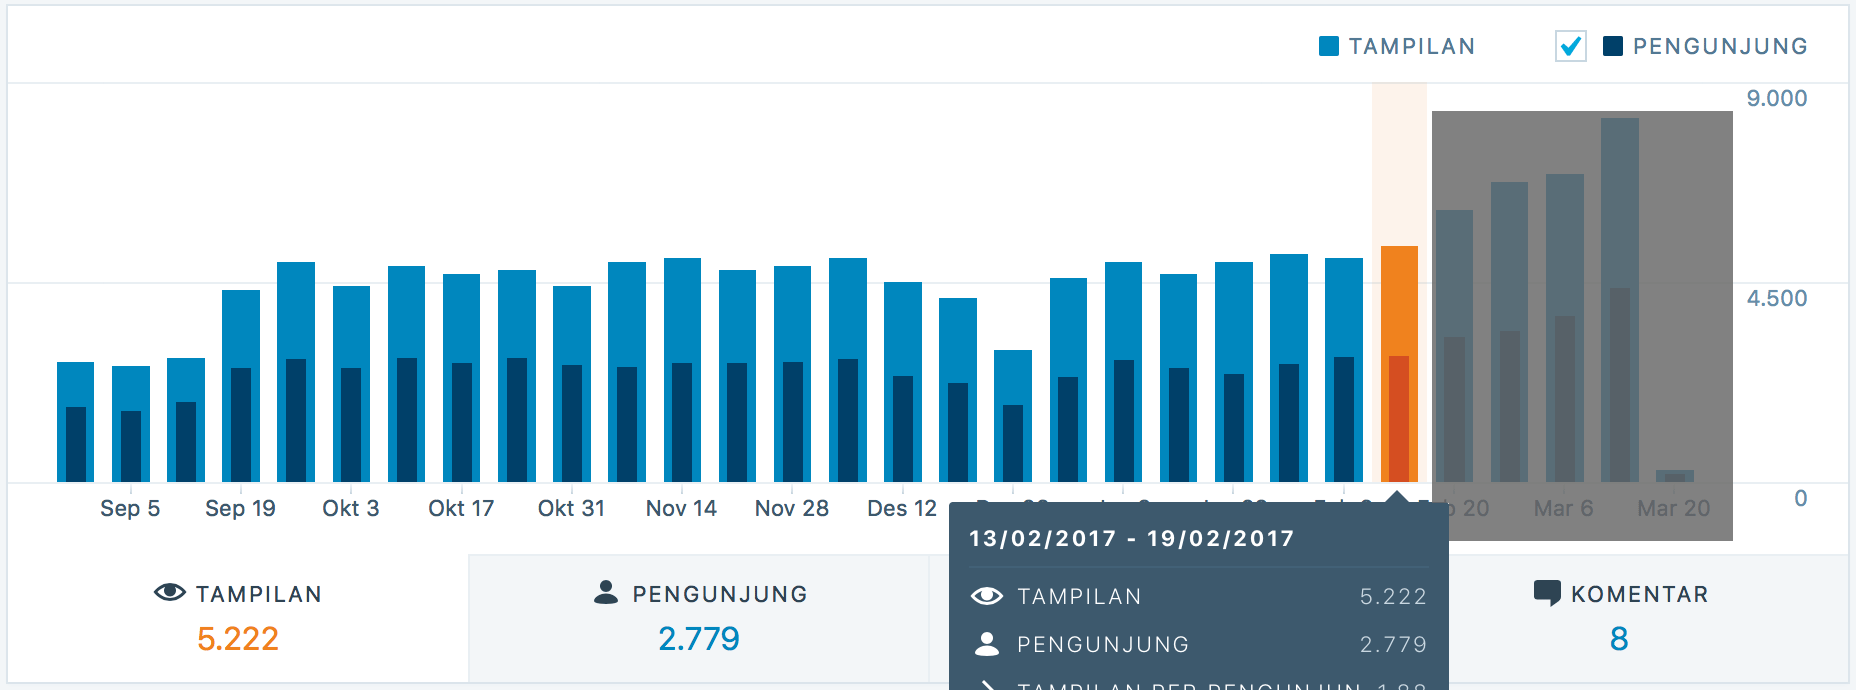 Statistik Bolasalju September 2016-Februari 2017